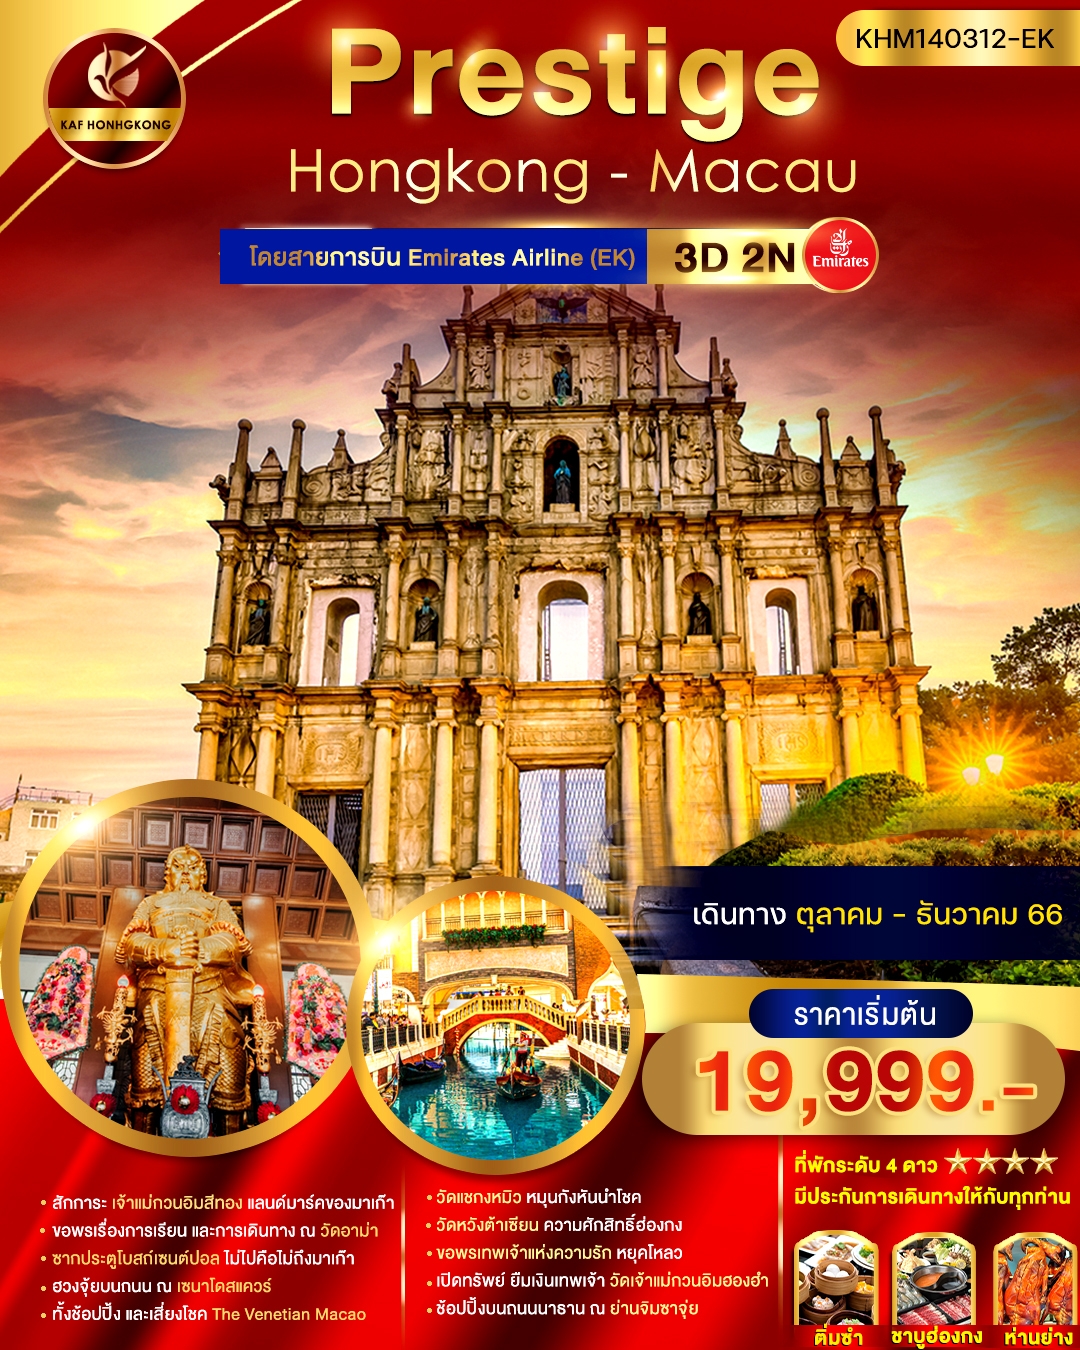 KHM140312-EK Prestige Hongkong Macau 3D 2N